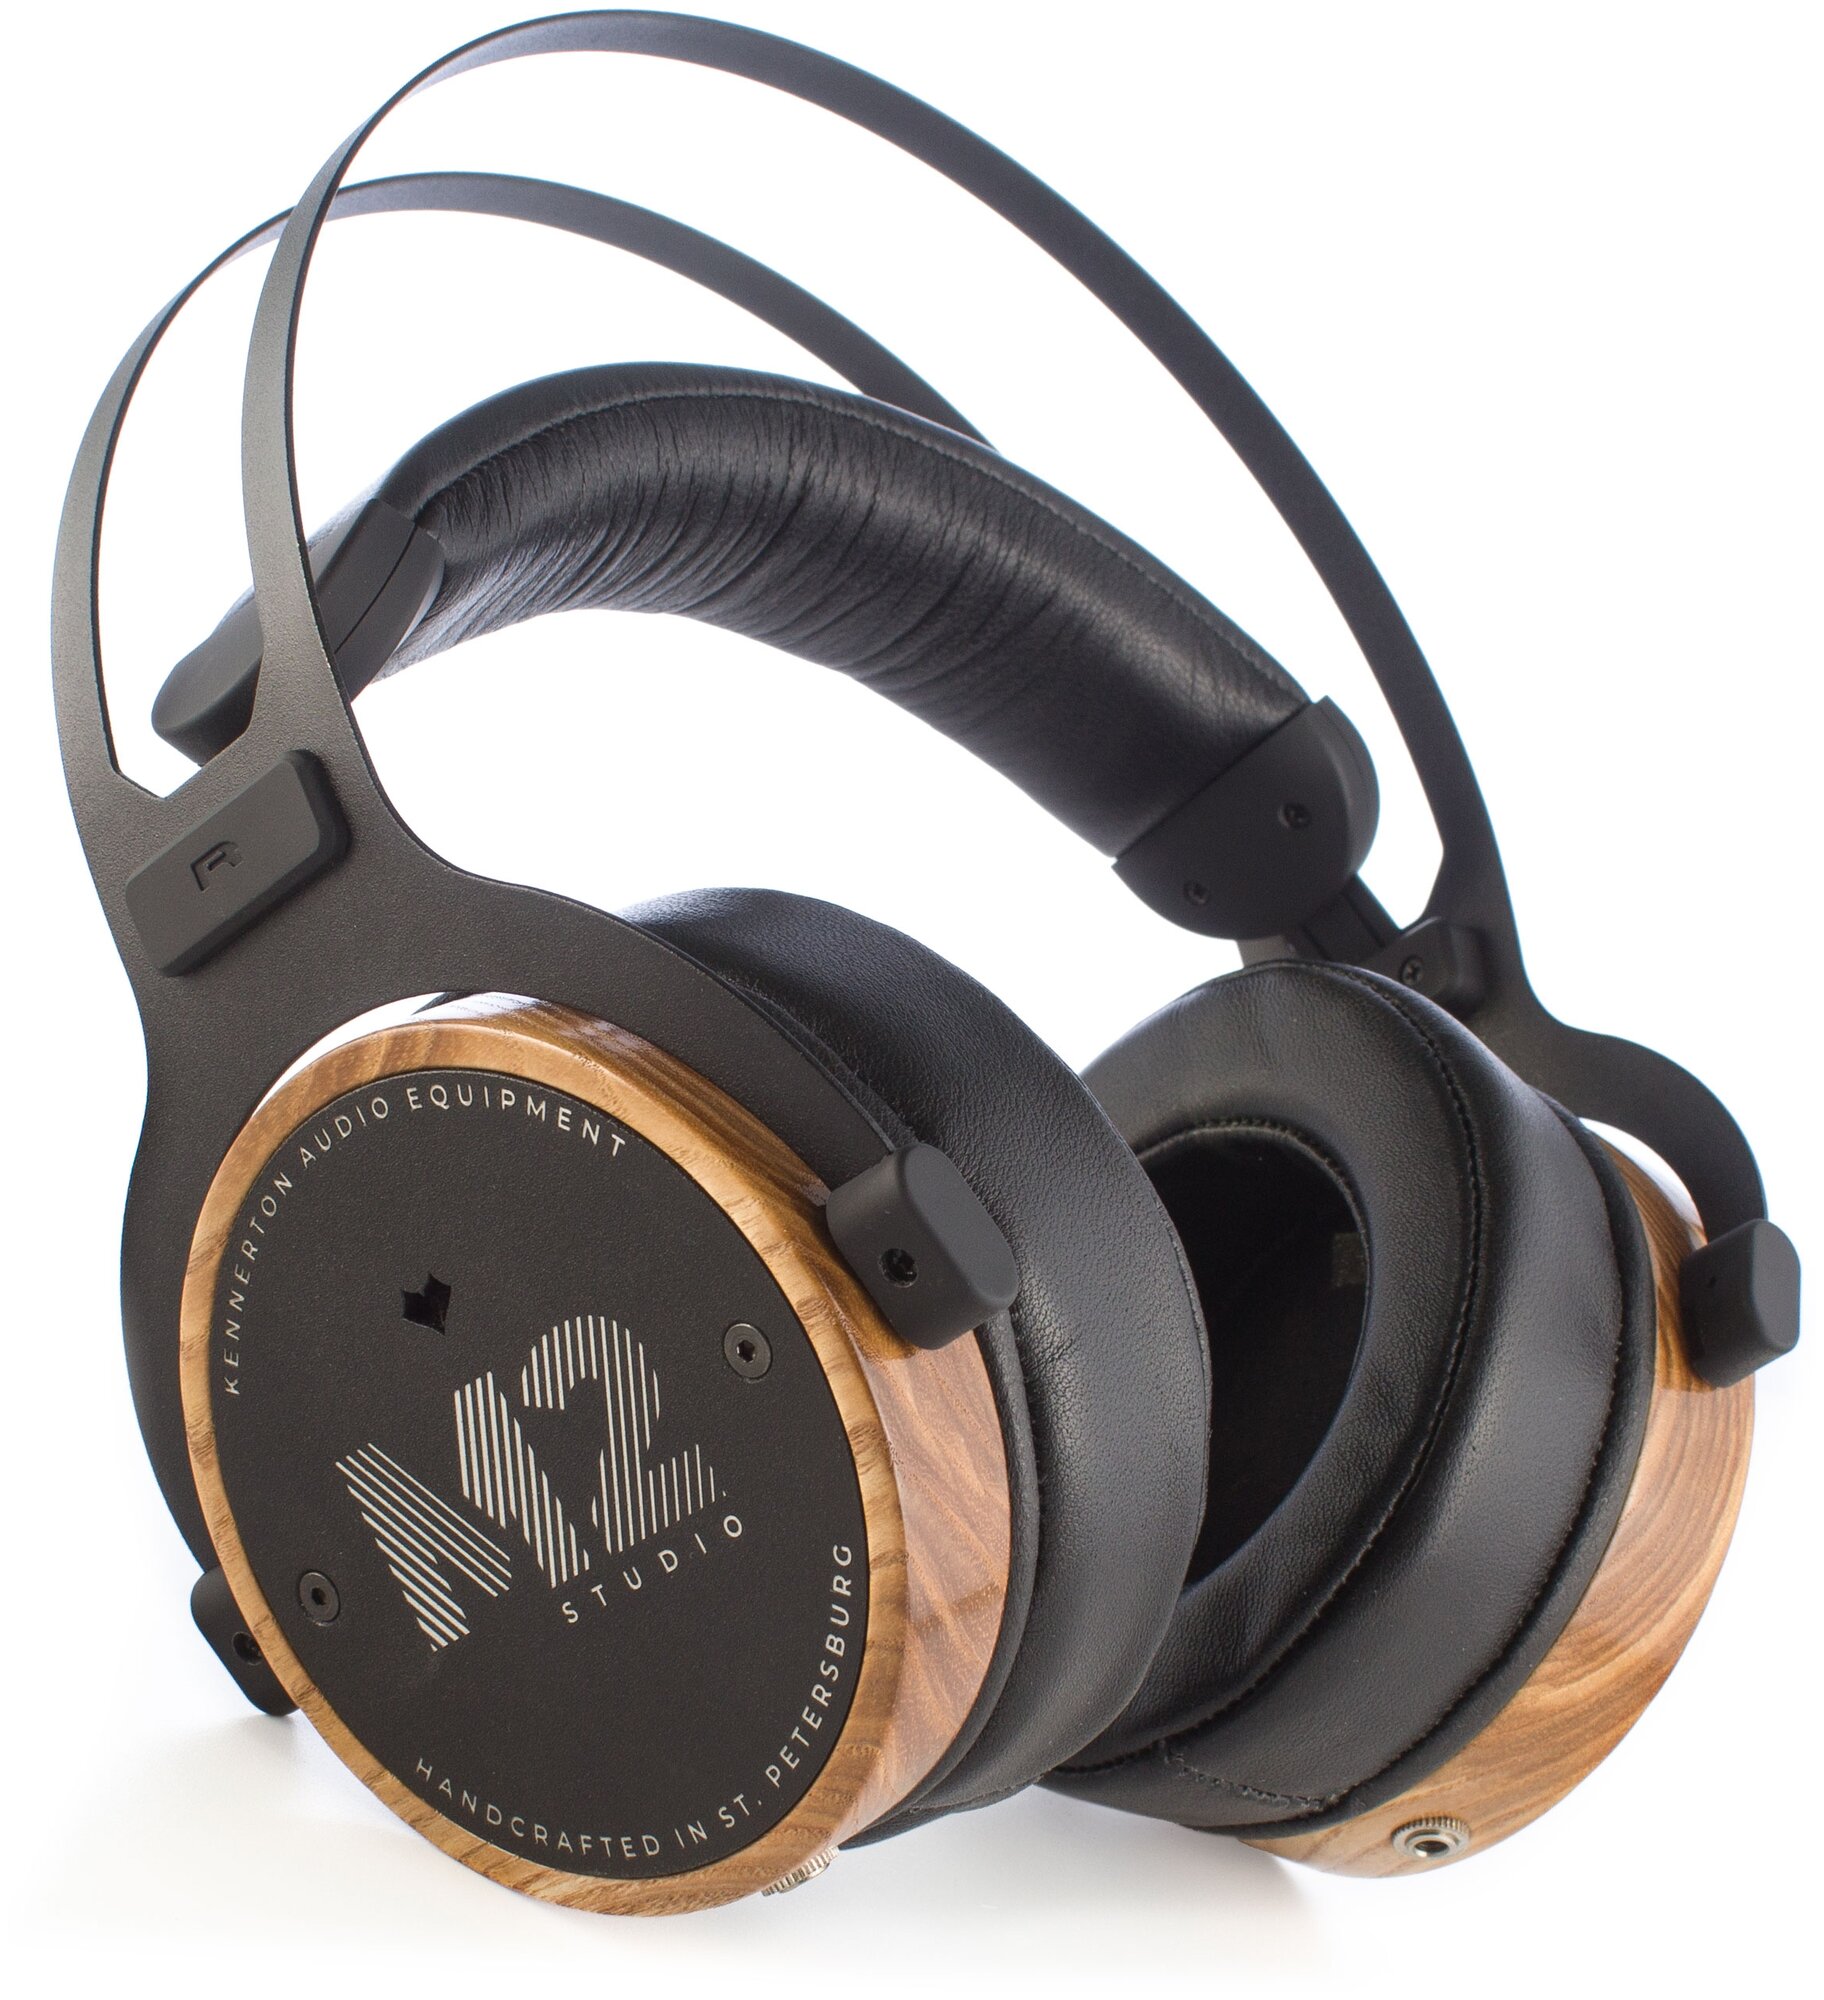 Kennerton Audio Equipment M12s